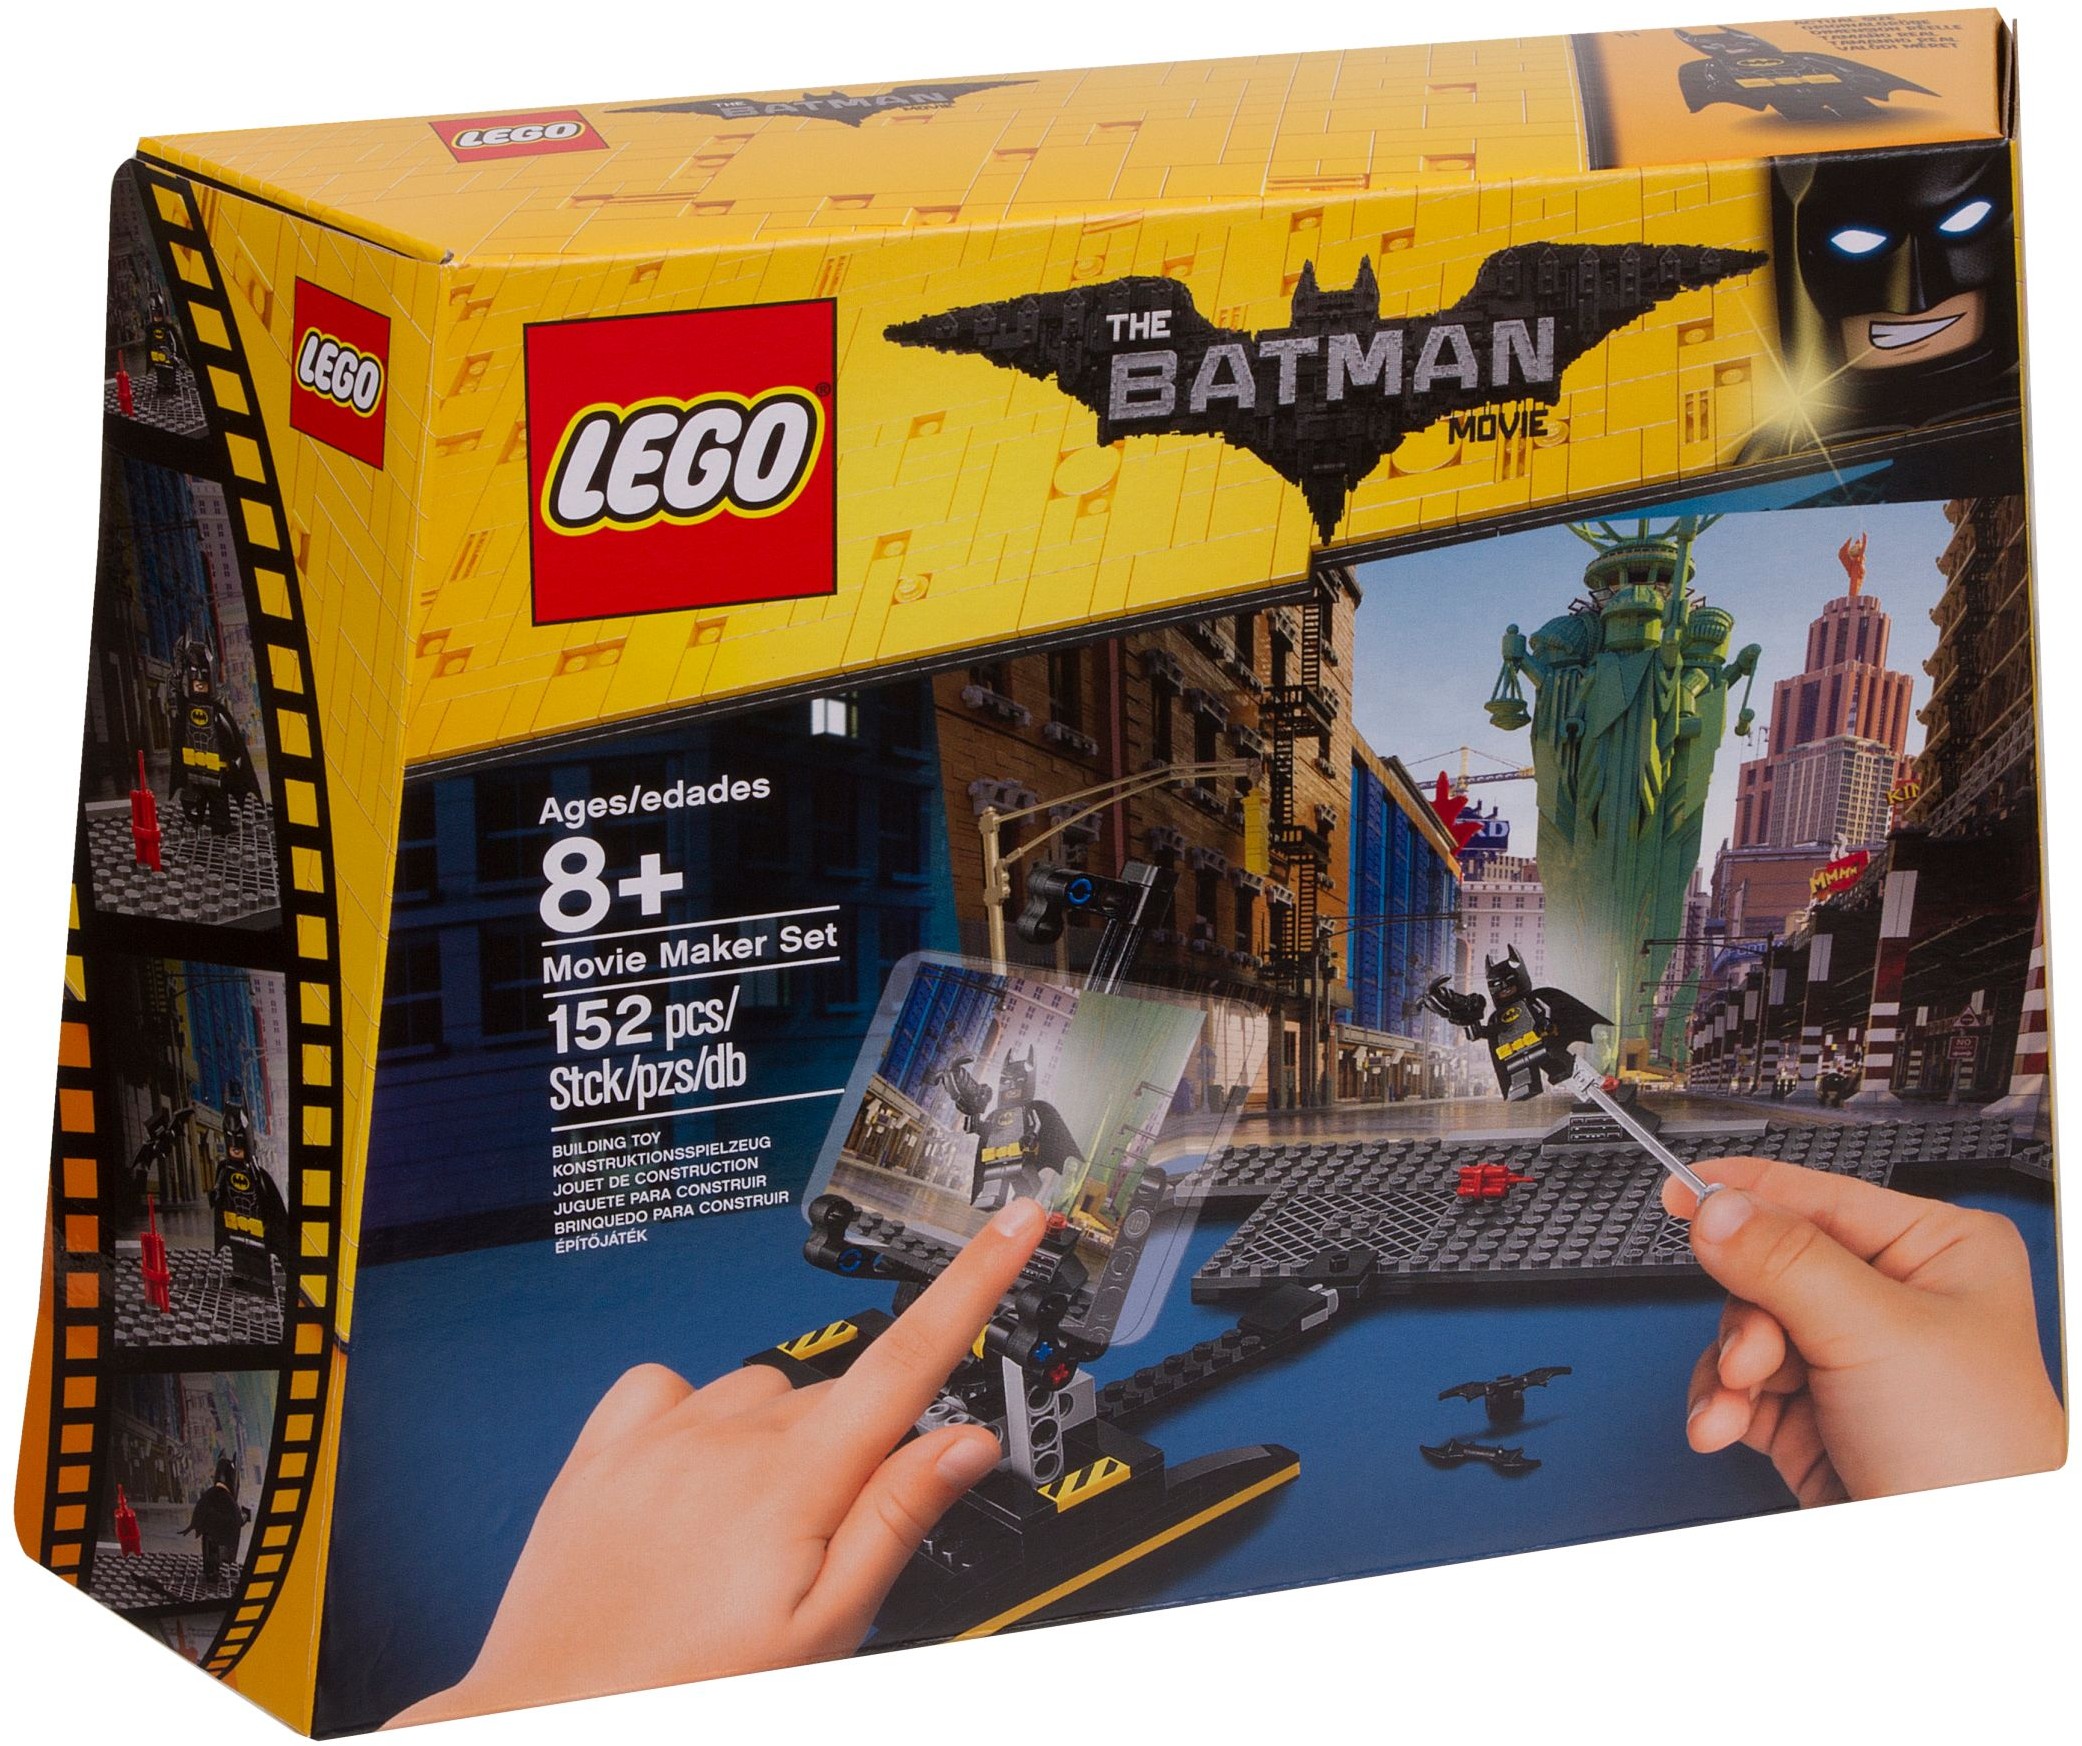 Brickfinder - The LEGO Batman Movie Sets Official Photos